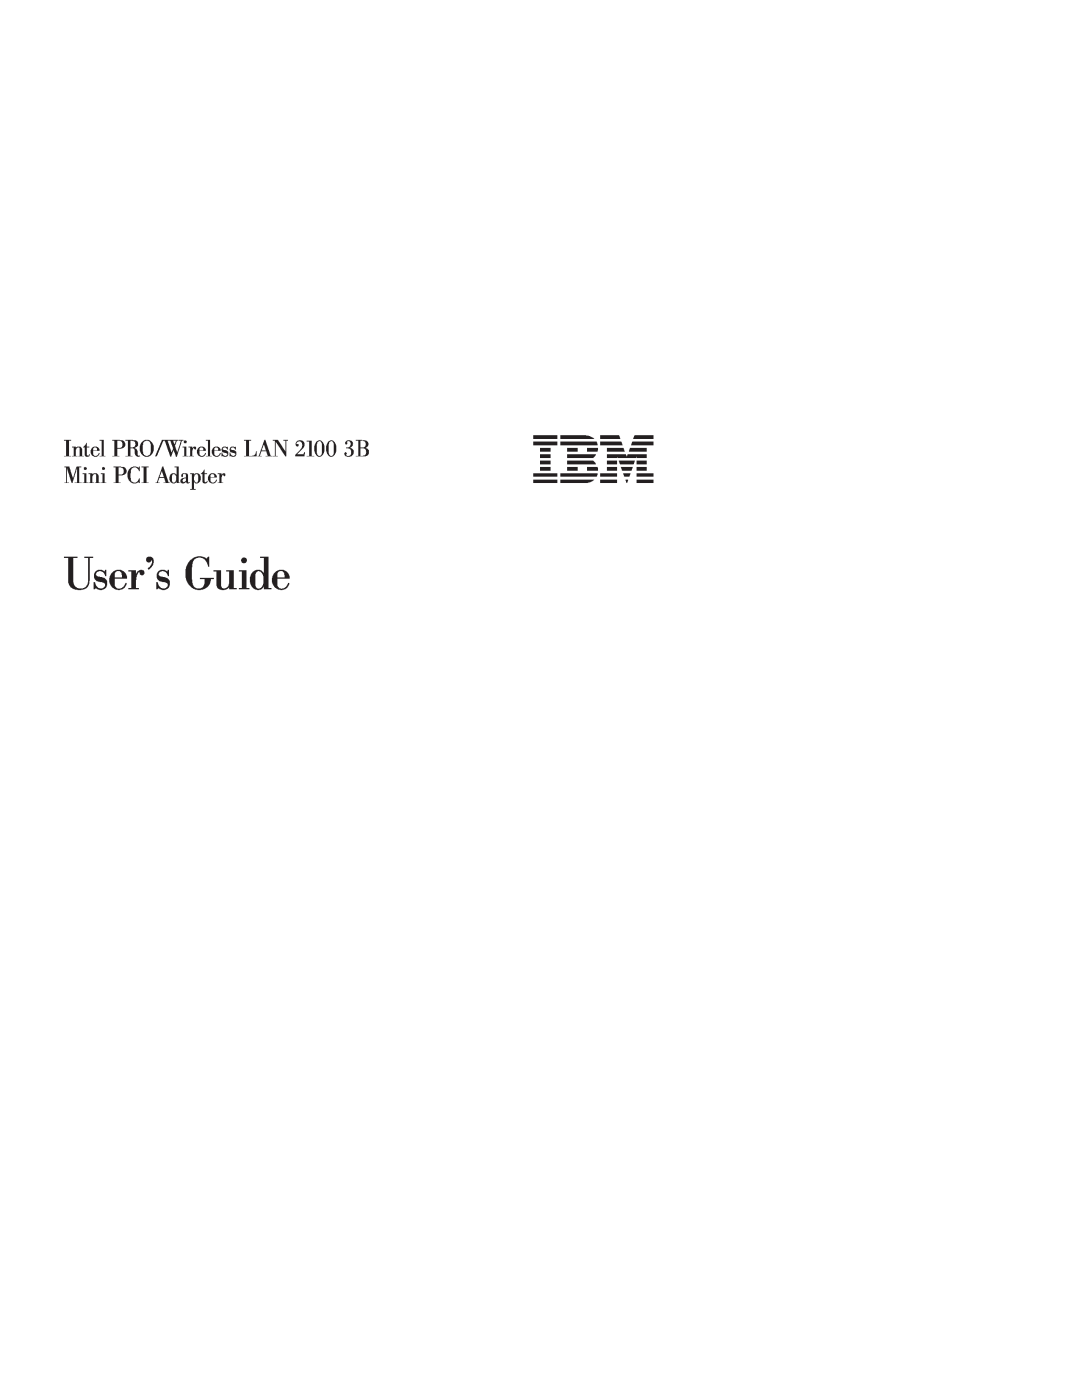 IBM manual User’s Guide, Intel PRO/Wireless LAN 2100 3B, Mini PCI Adapter 